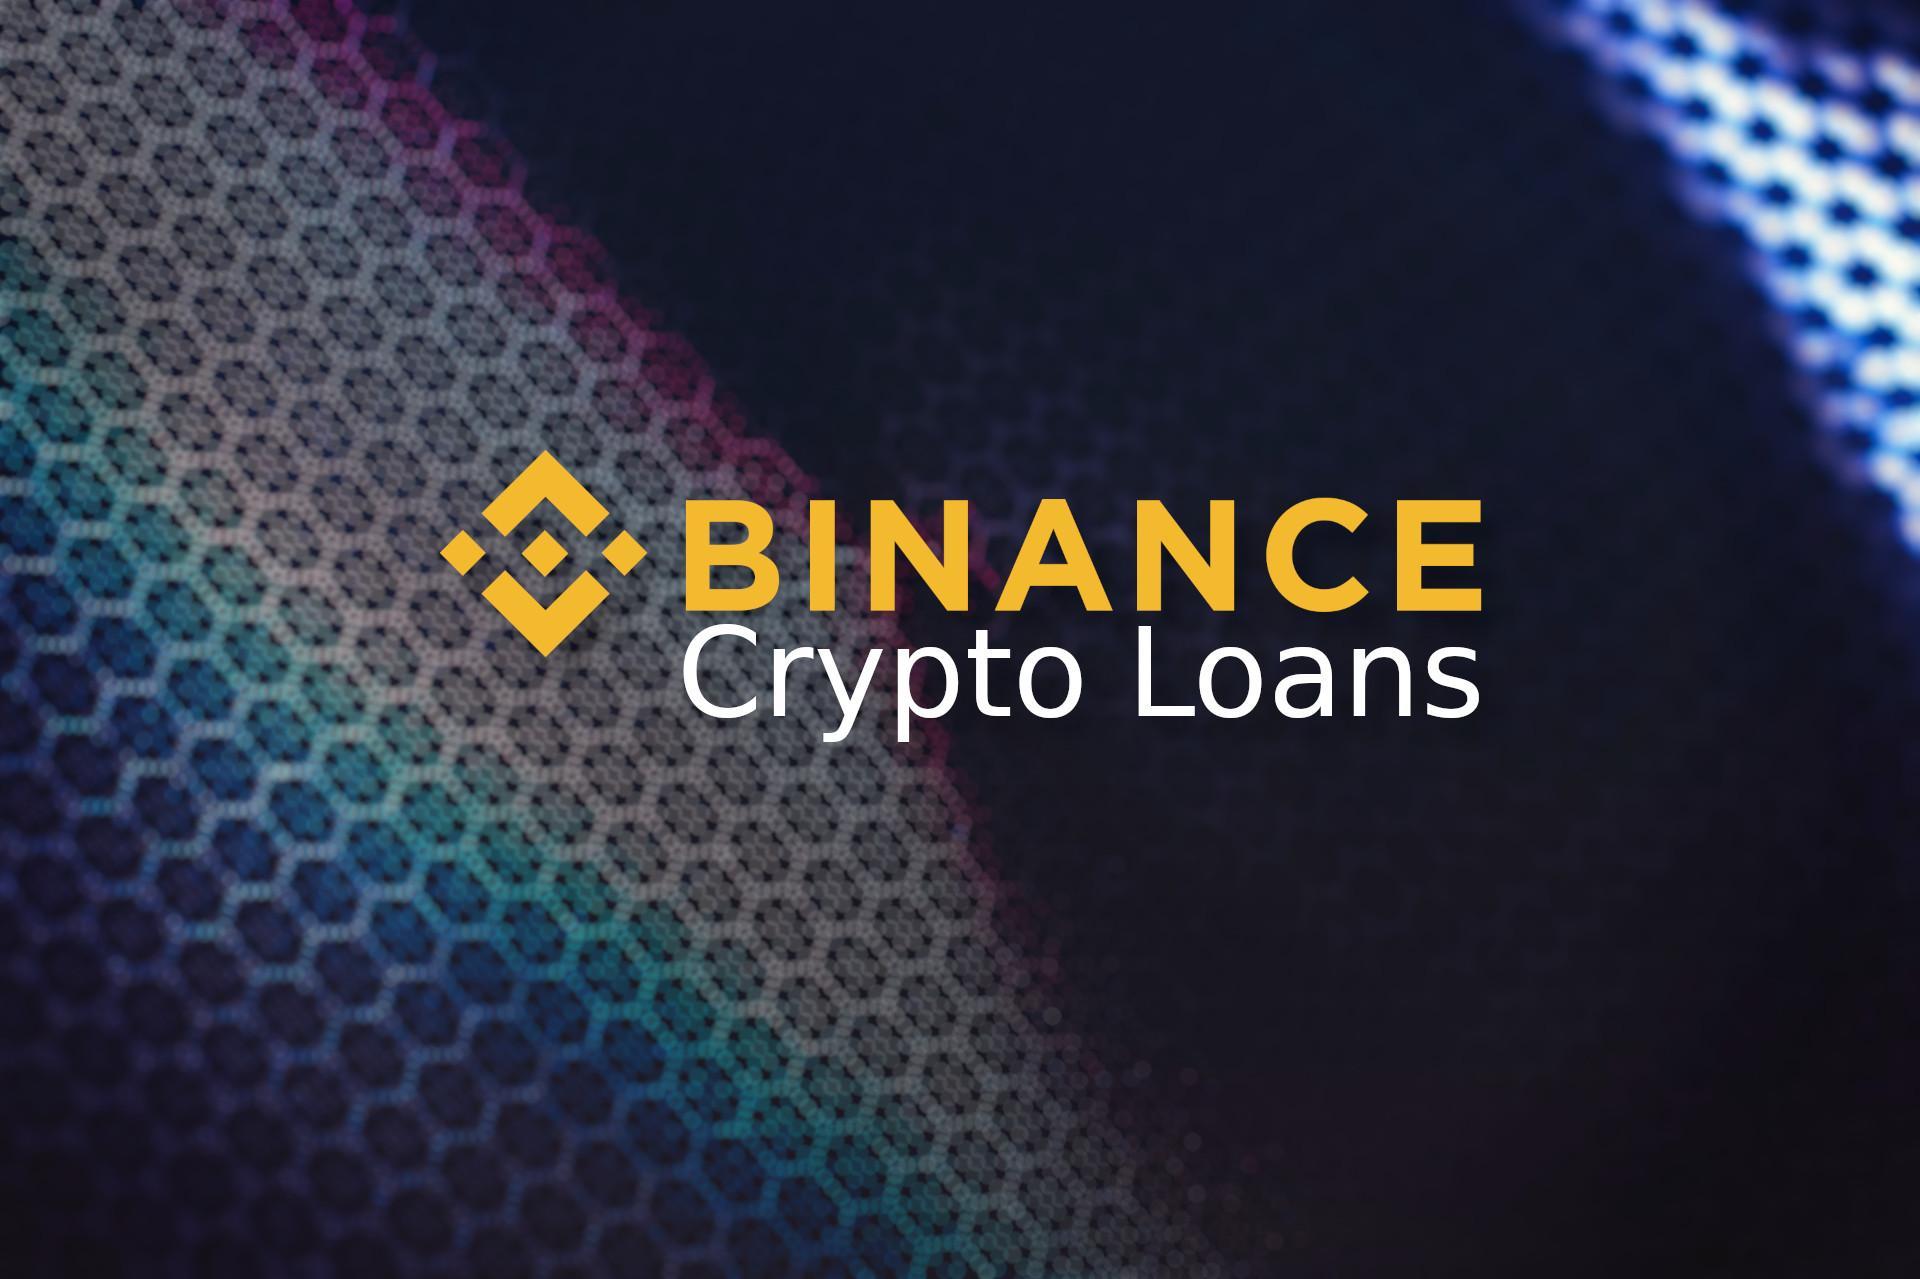 Binance Crypto Loans logo cover image